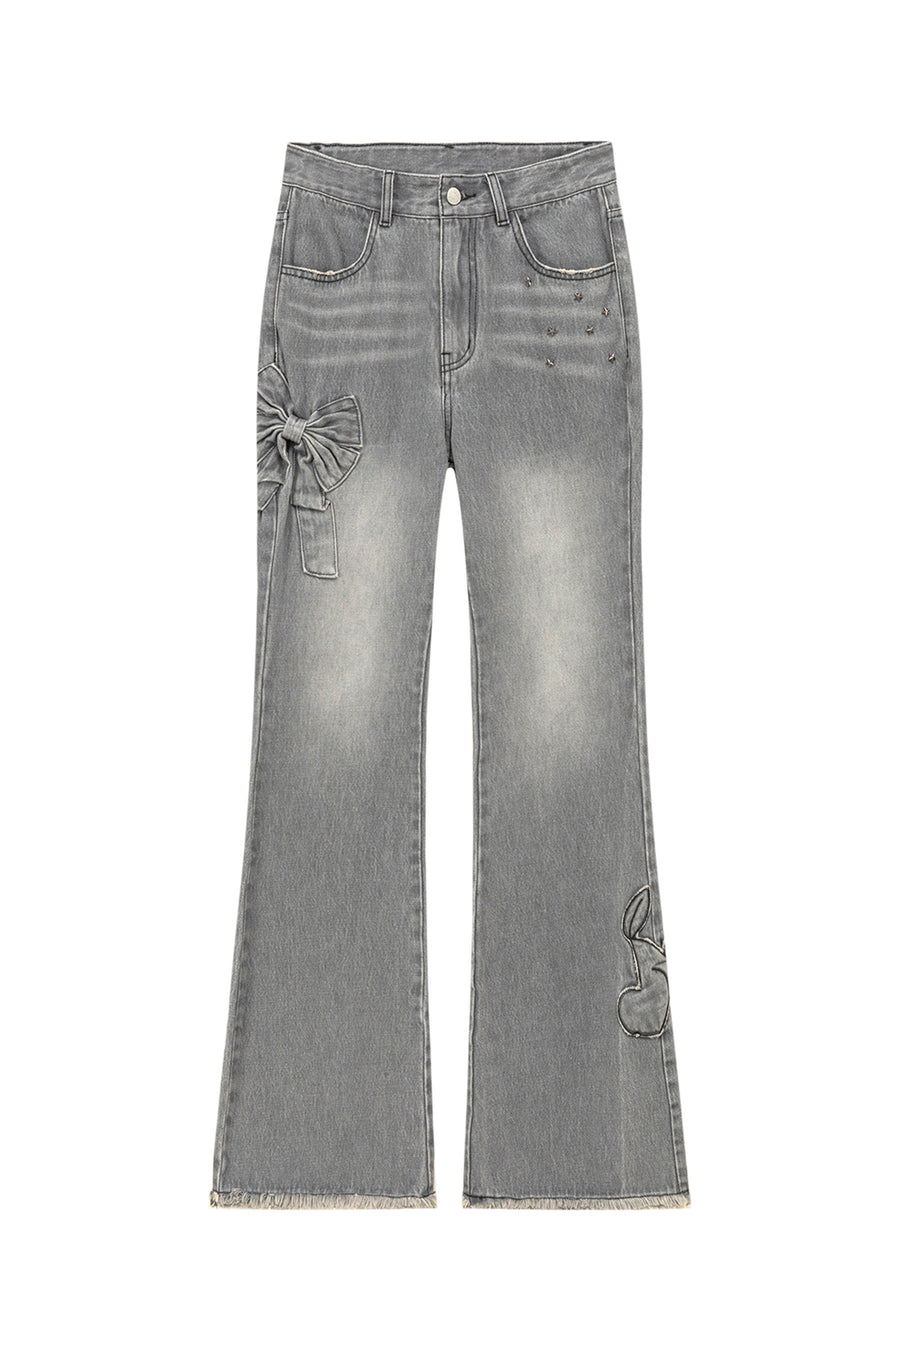 CHUU Bow Design Frayed Hem Bootcut Denim Jeans